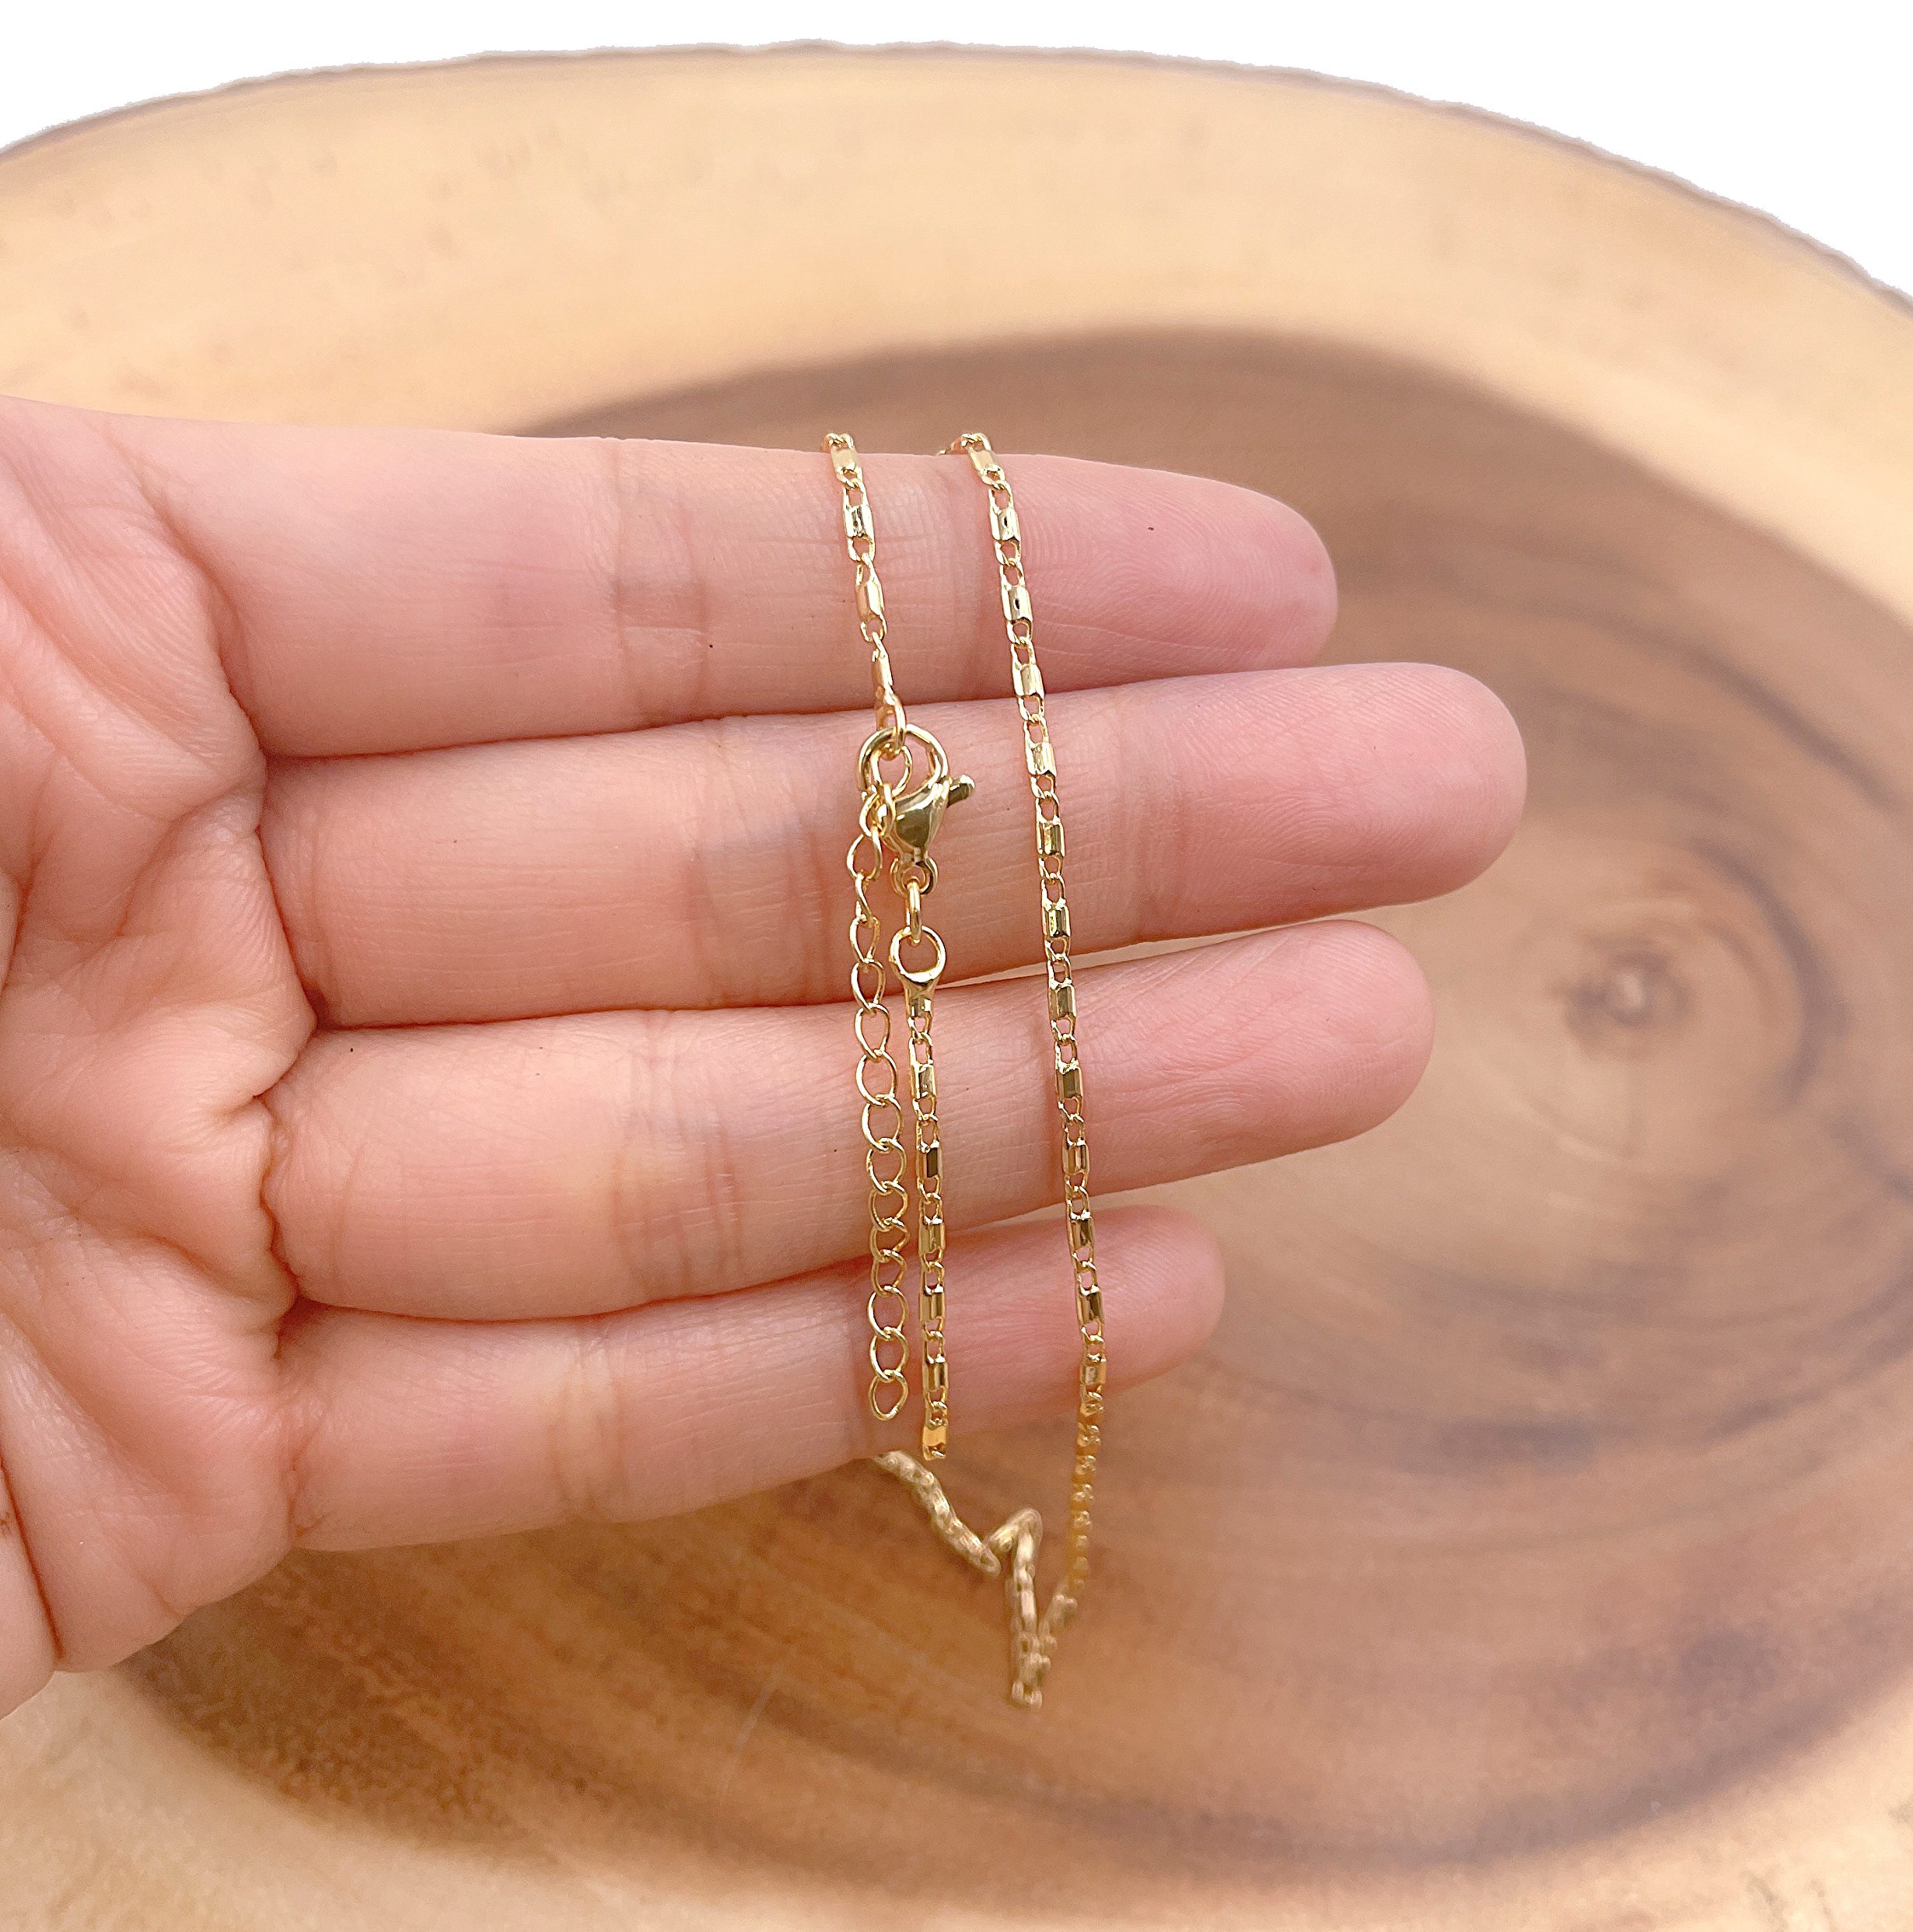 Lock Pendant Chain Necklace 1pc